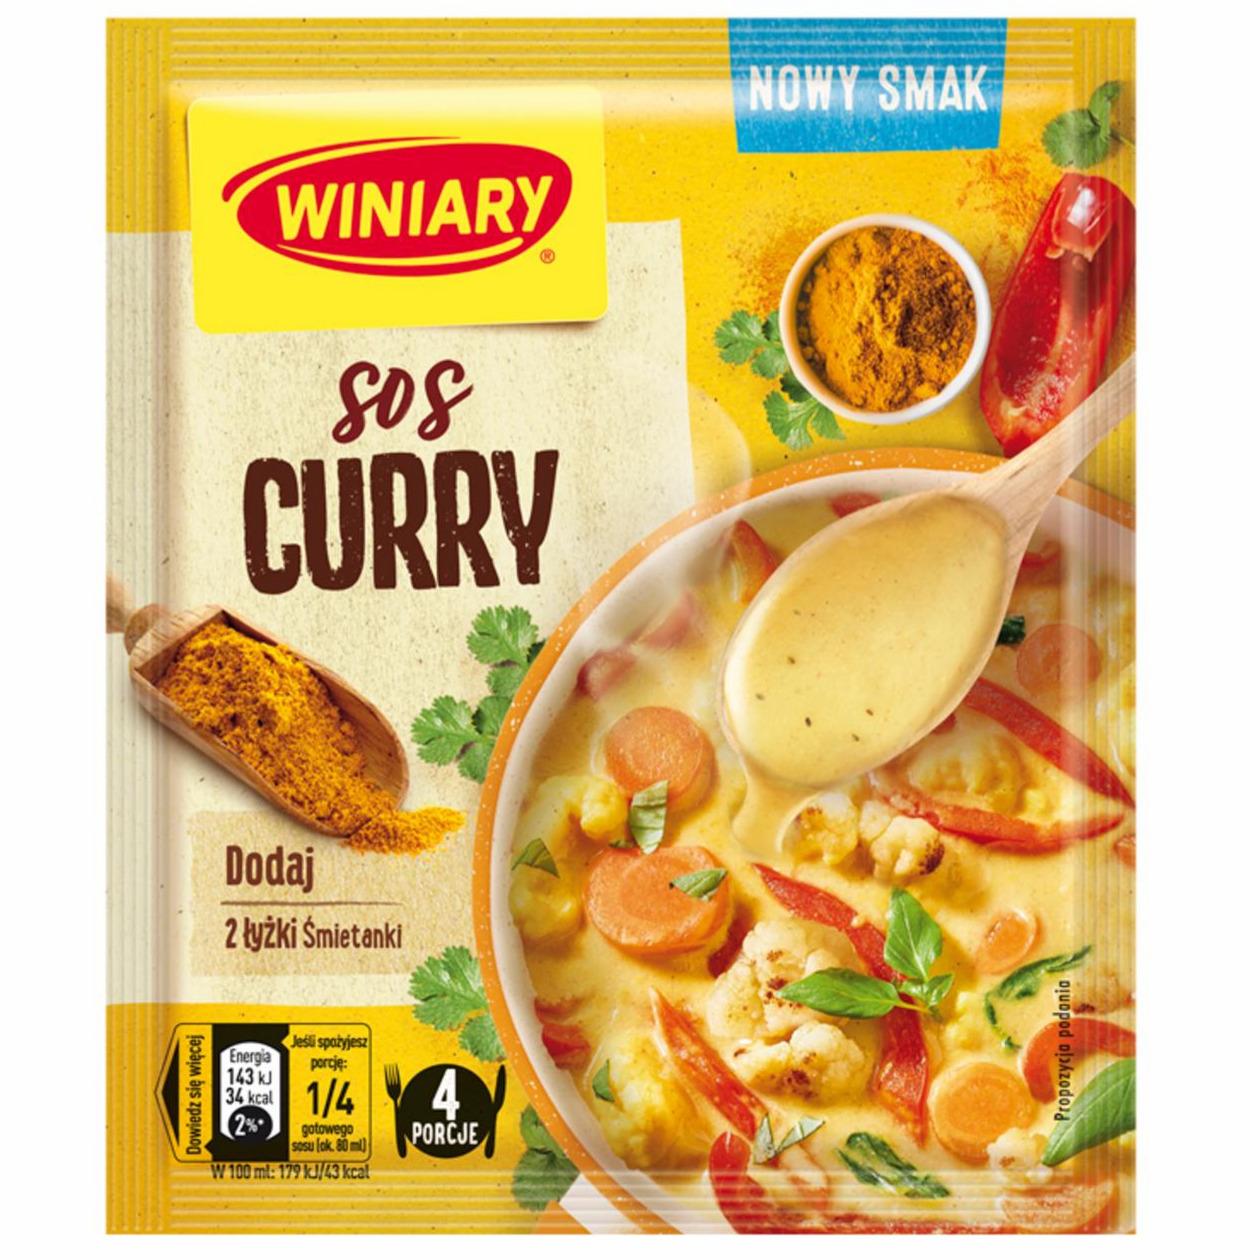 Zdjęcia - Winiary Sos curry 29 g